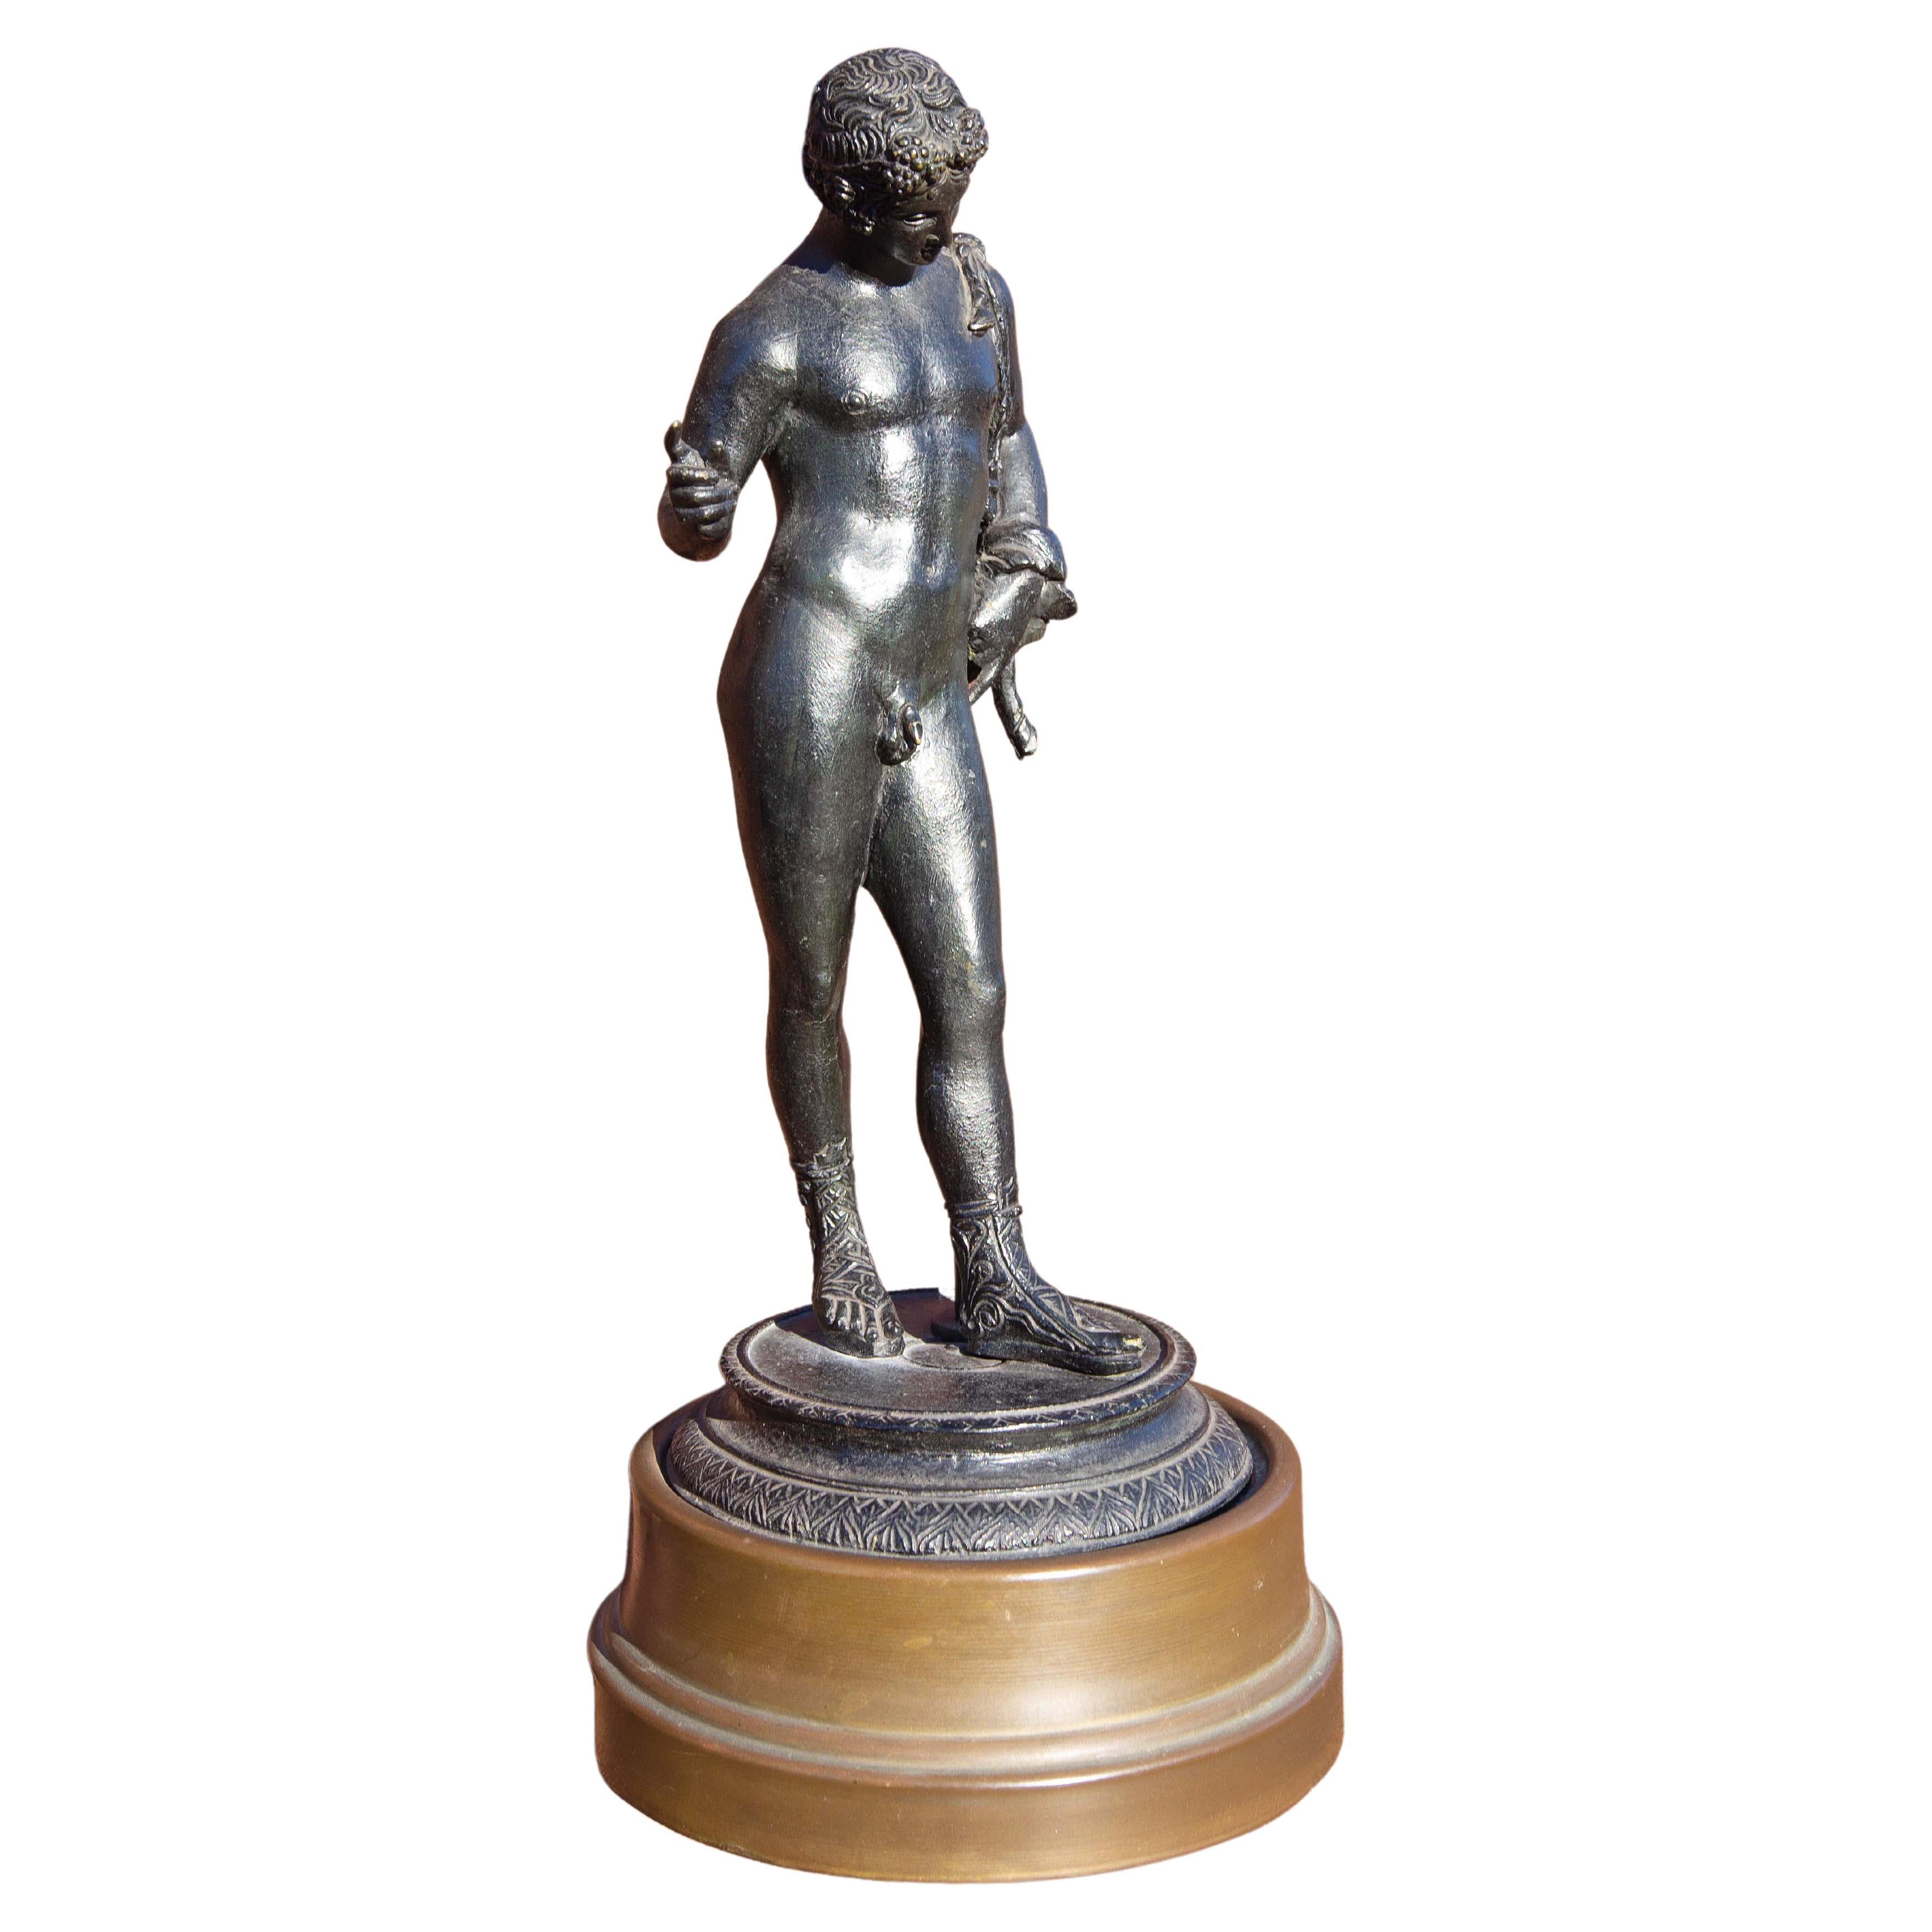 Bronzestatue des Narzissen in Grand Tour-Optik als Lampe montiert im Angebot